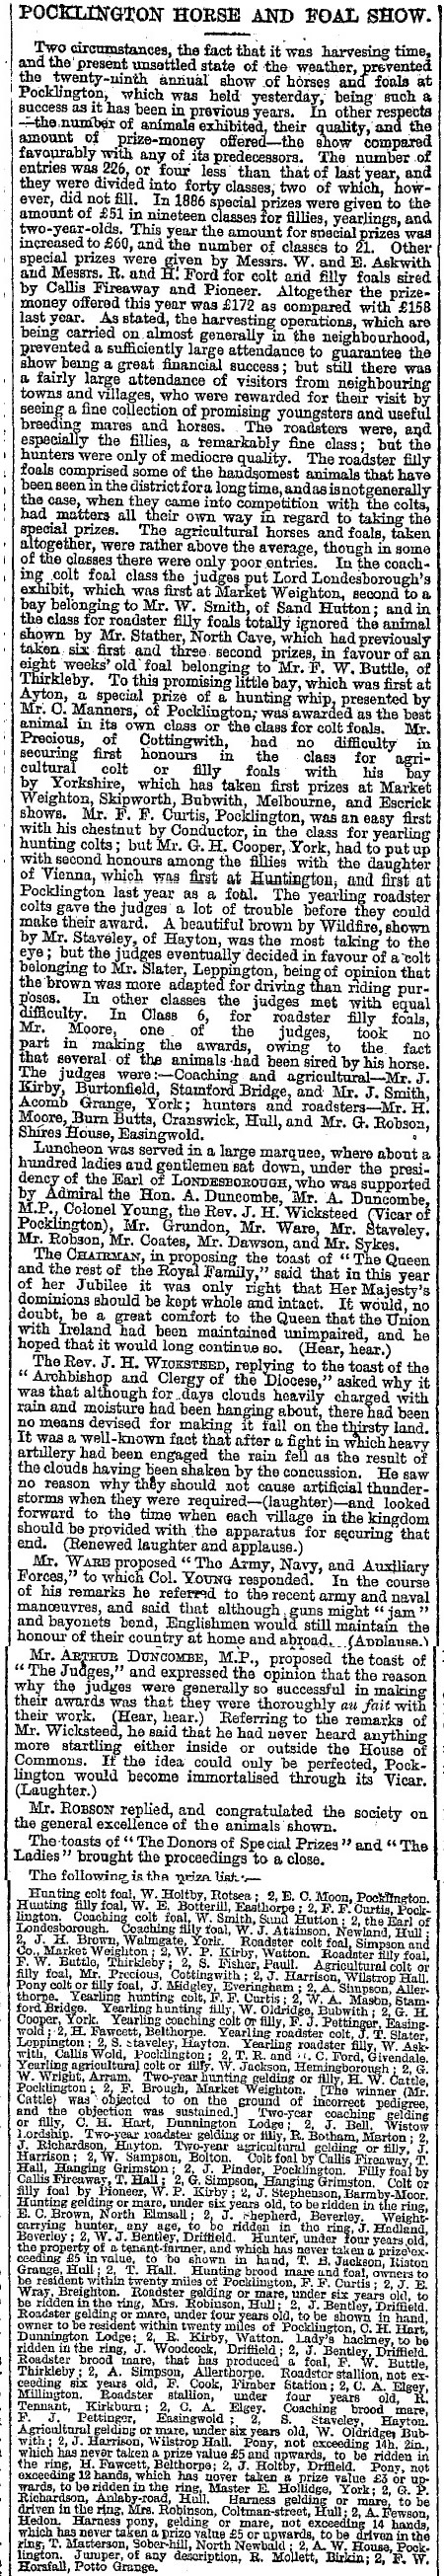 1887 Pocklington Horse & Foal Show